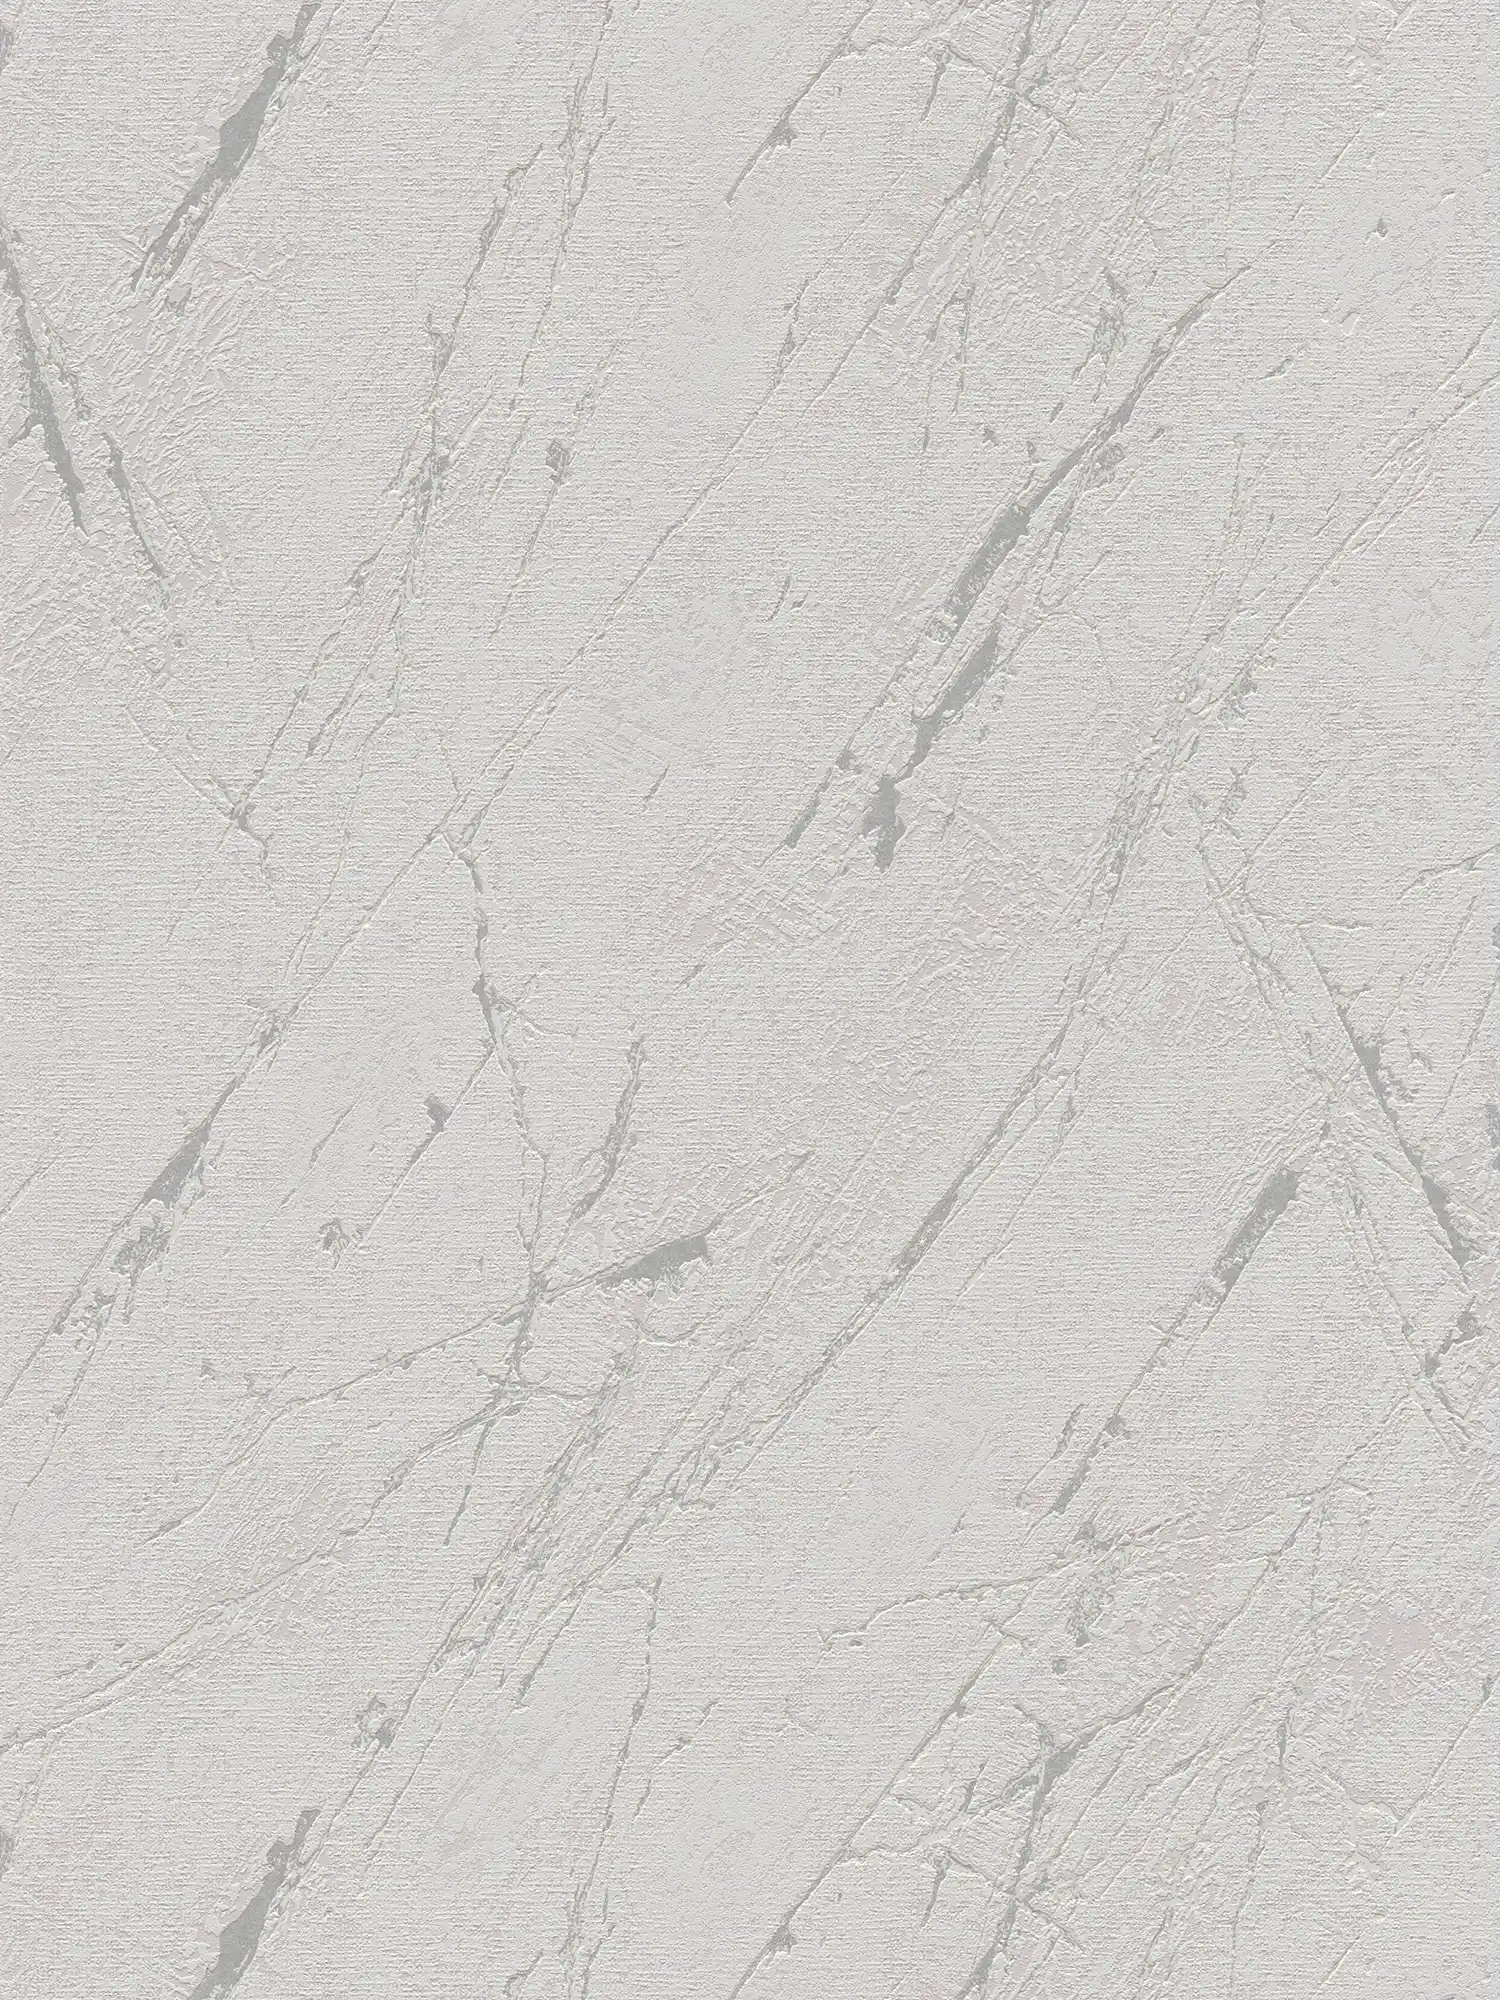 Non-woven wallpaper in plaster look with metallic effect - grey, silver, metallic
